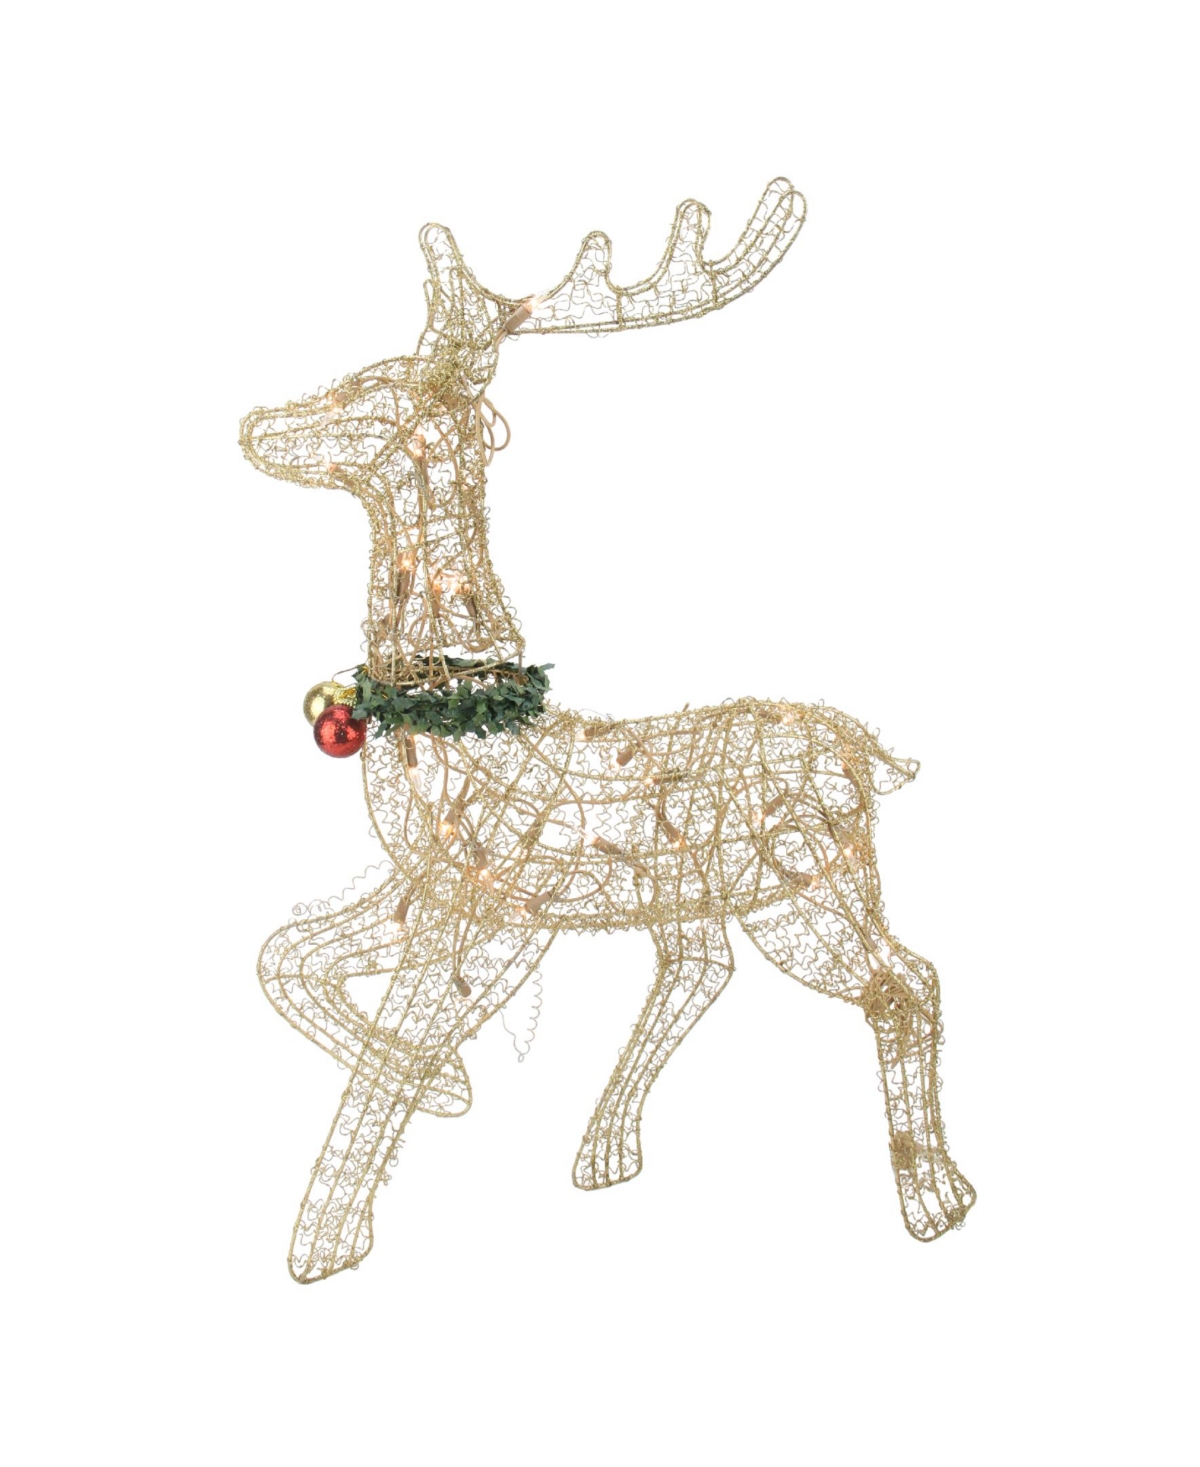 25" Lighted Gold Sisal Prancing Reindeer Christmas Outdoor Decoration - Gold